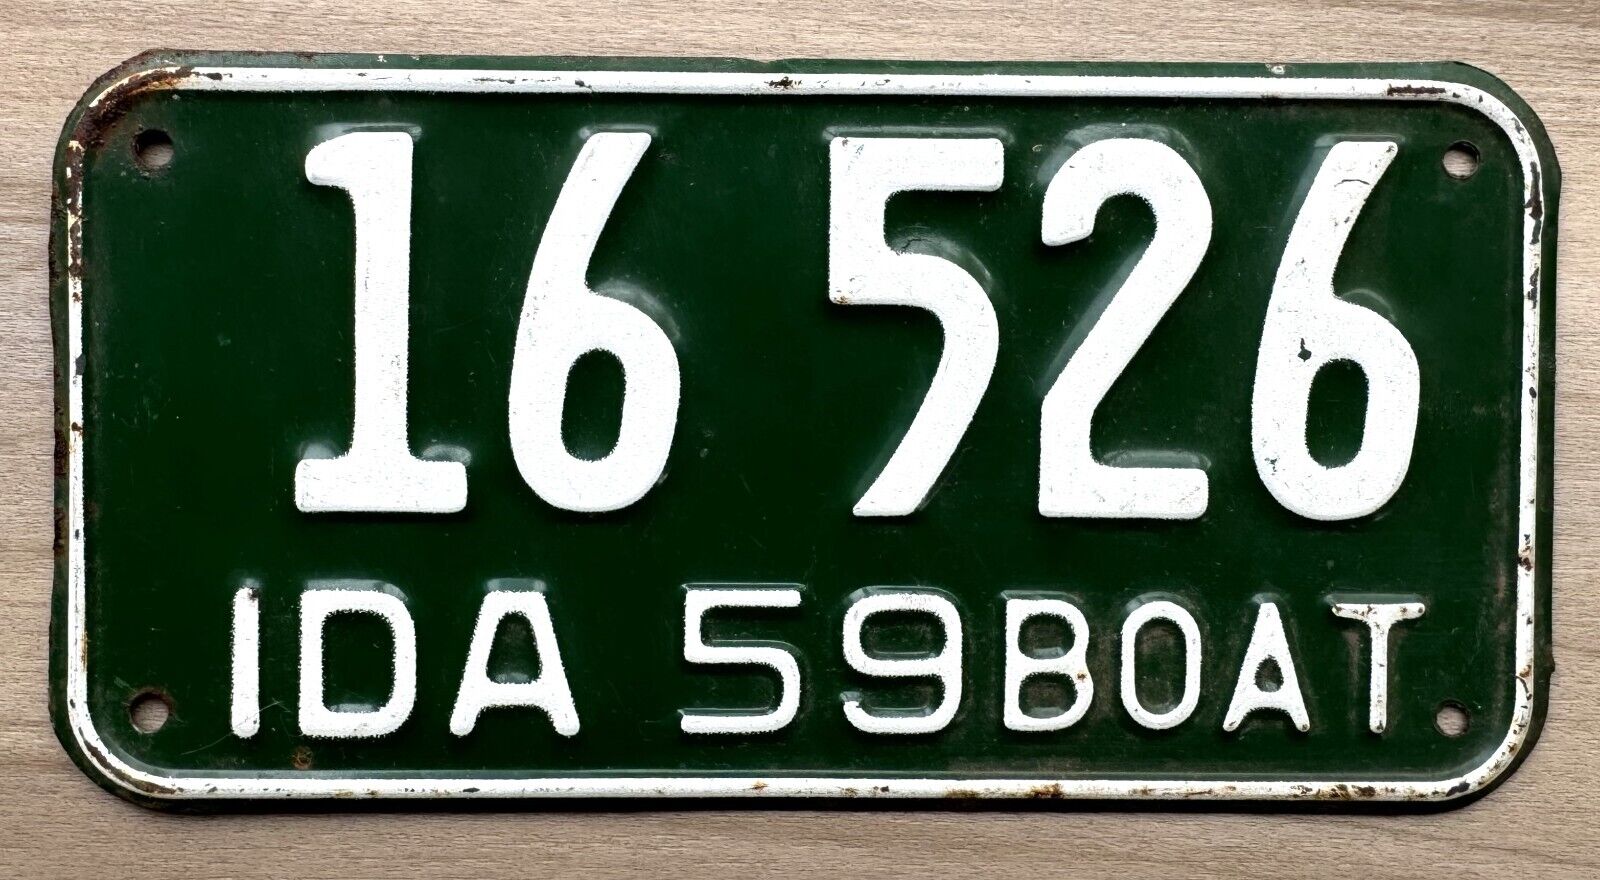 1959 Idaho Boat License Plate -  Nice Original Paint Condition